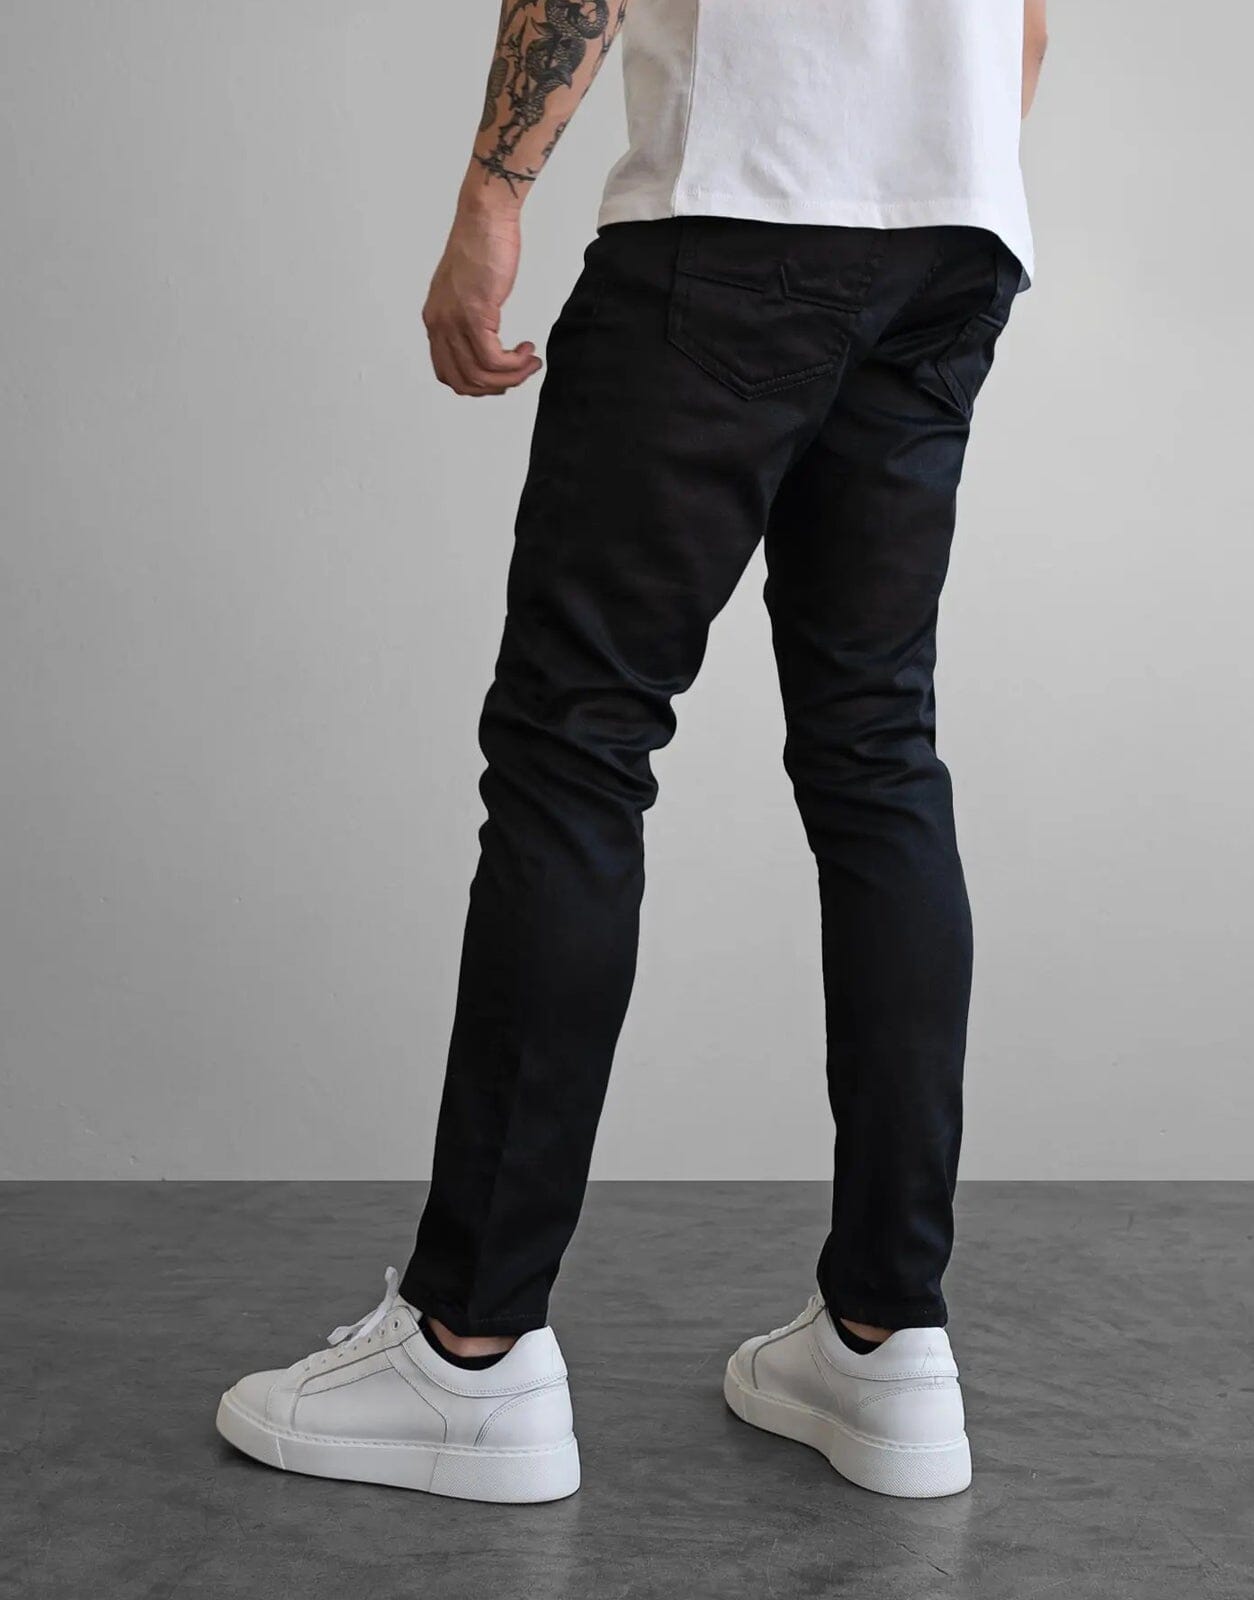 Fade Iconic Rogue Wax Coated Black Jeans - Subwear